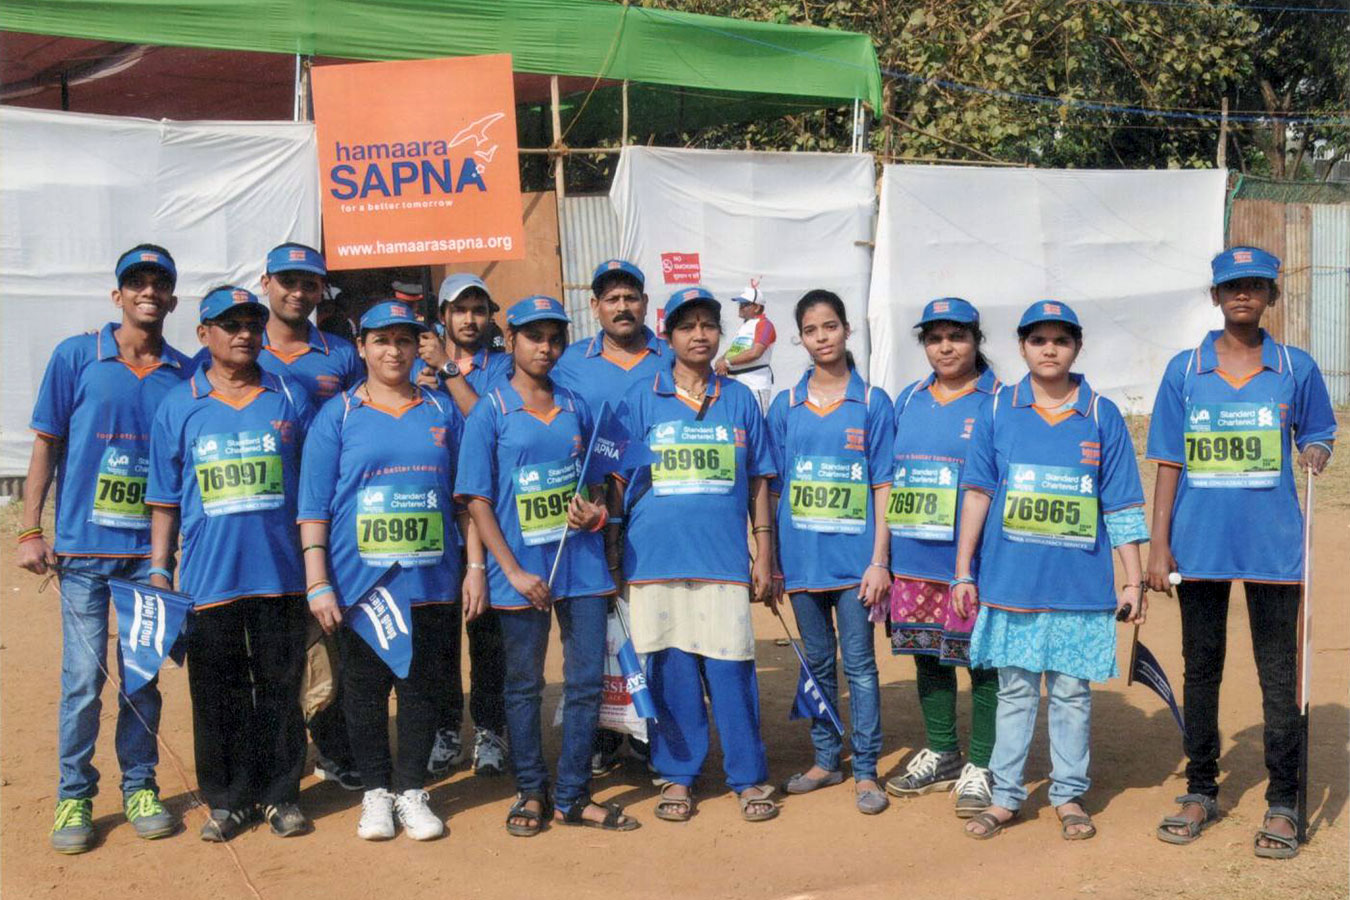 Staff and beneficiaries under the Hamaara Sapna Banner at the Mumbai Marathon (January, 2015)